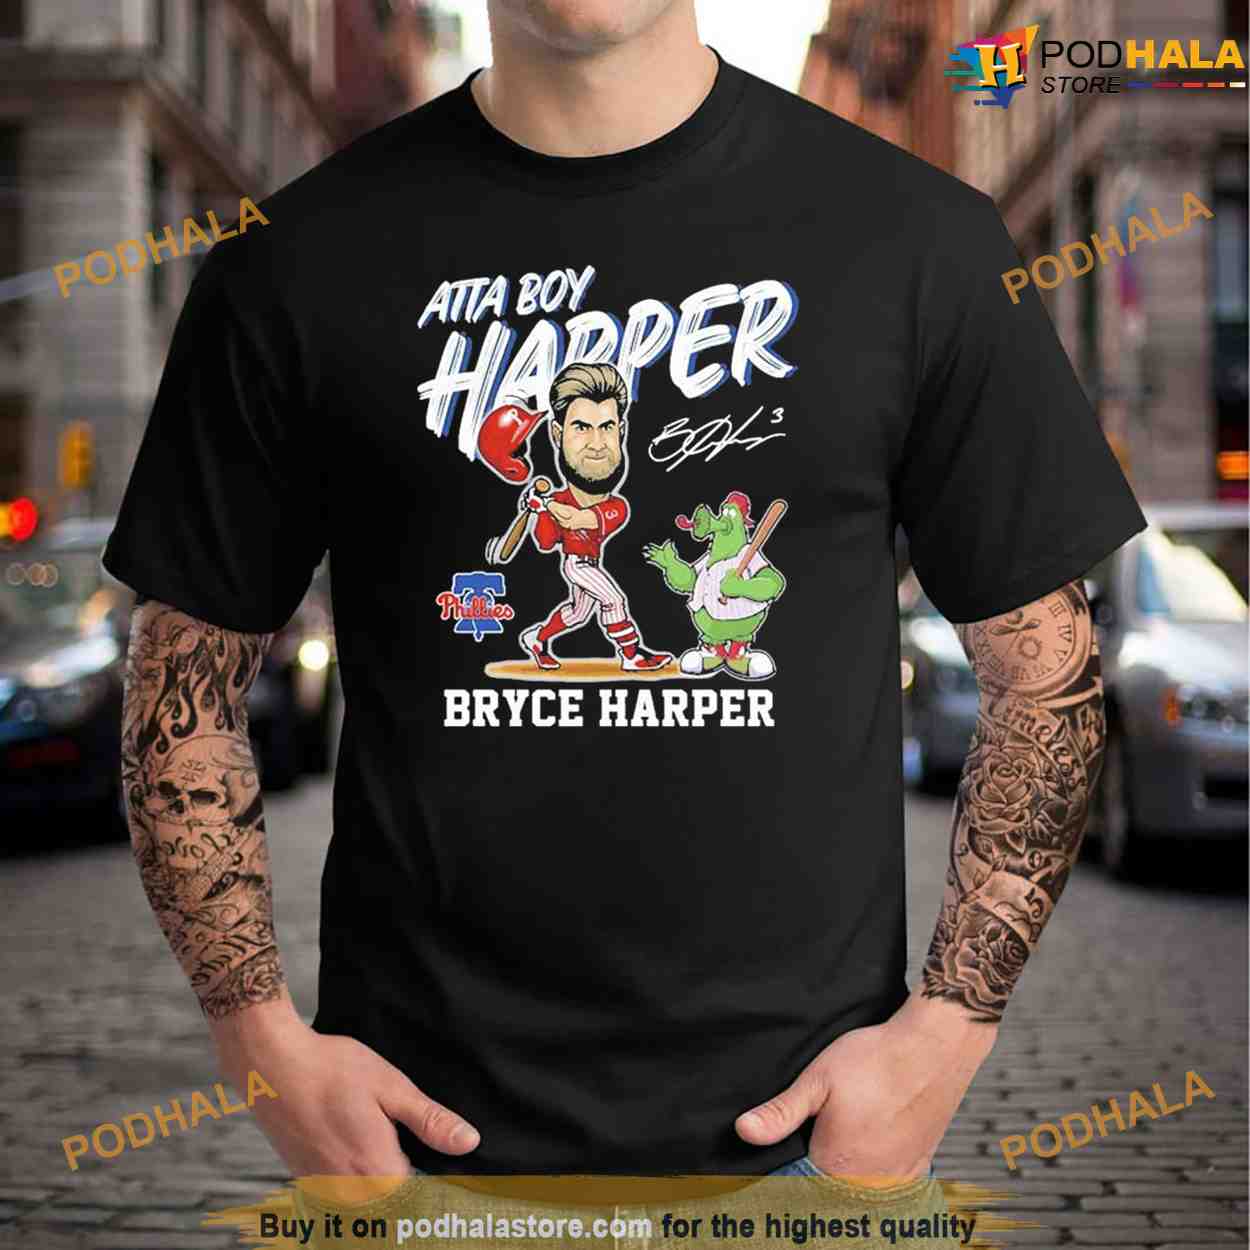 Atta-boy, Harper!' Where to get the Bryce Harper Philadelphia Phillies shirt  